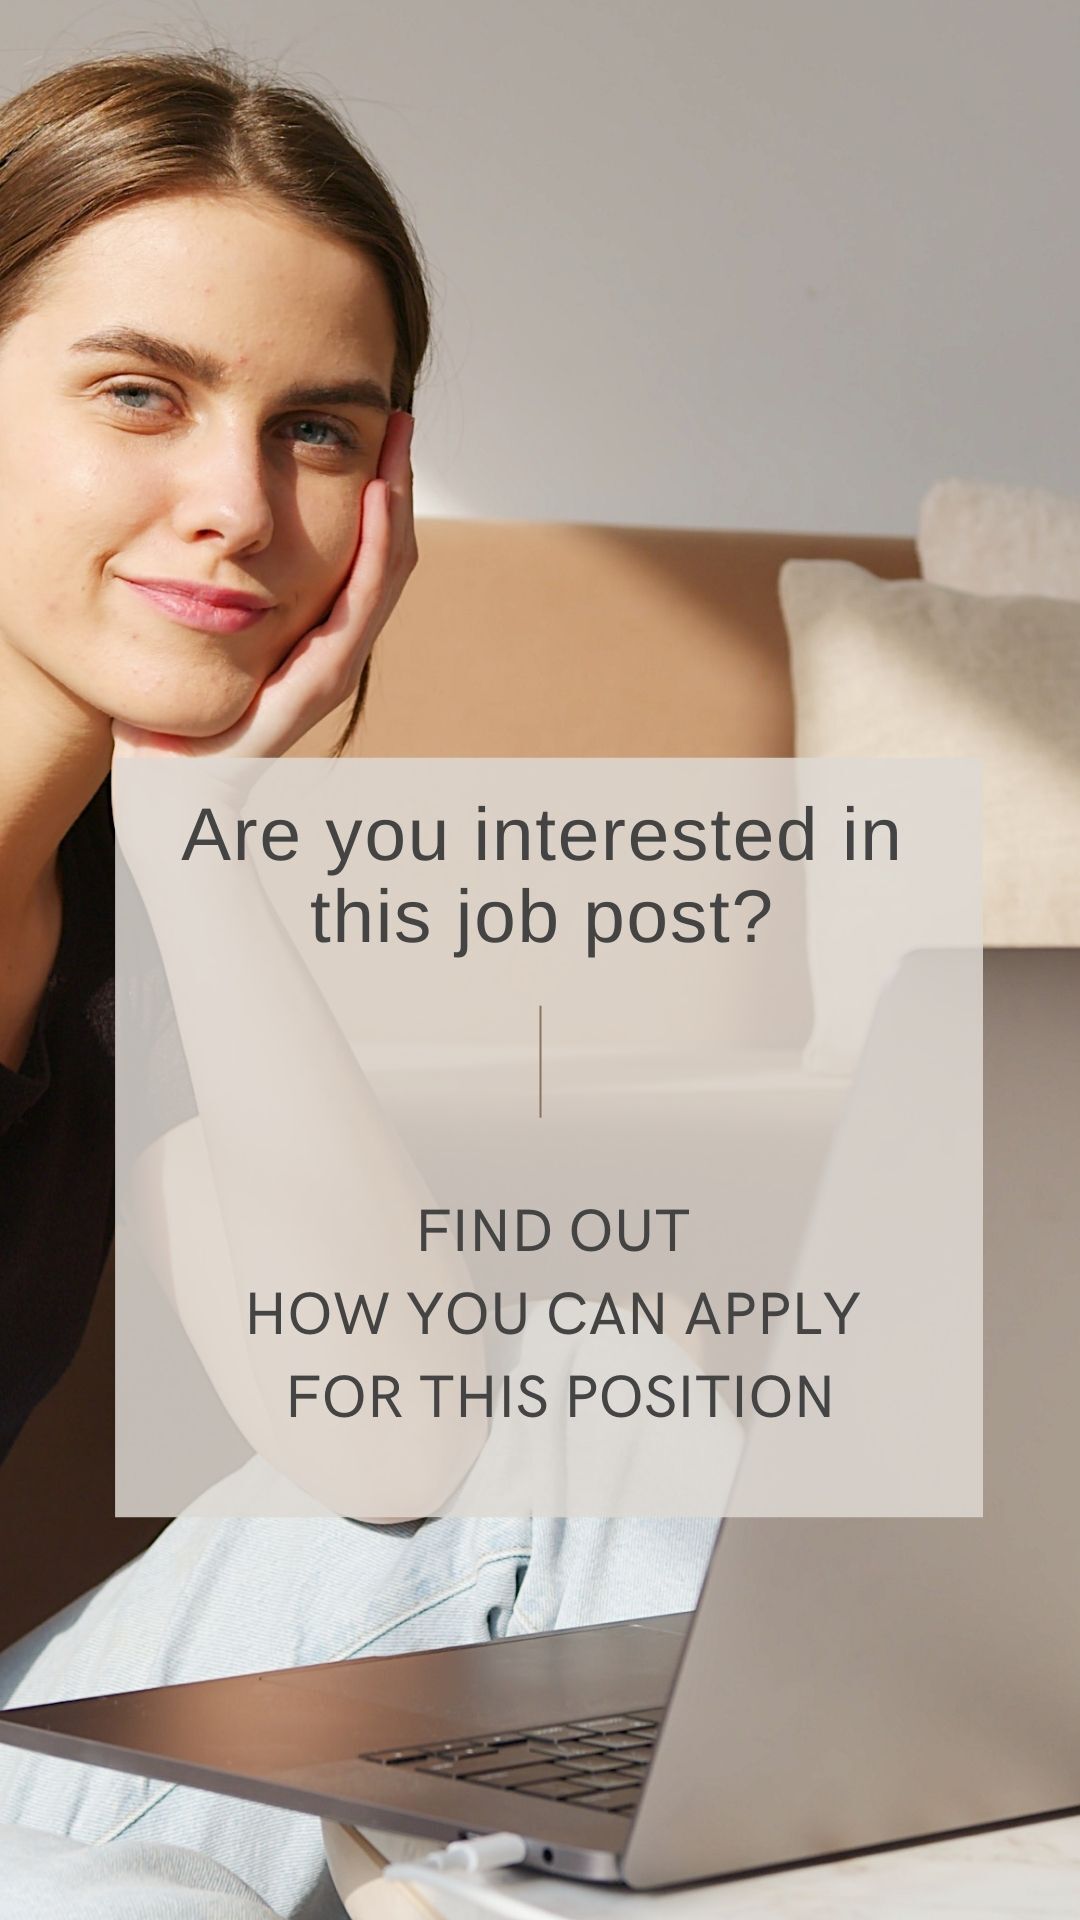 Job posts